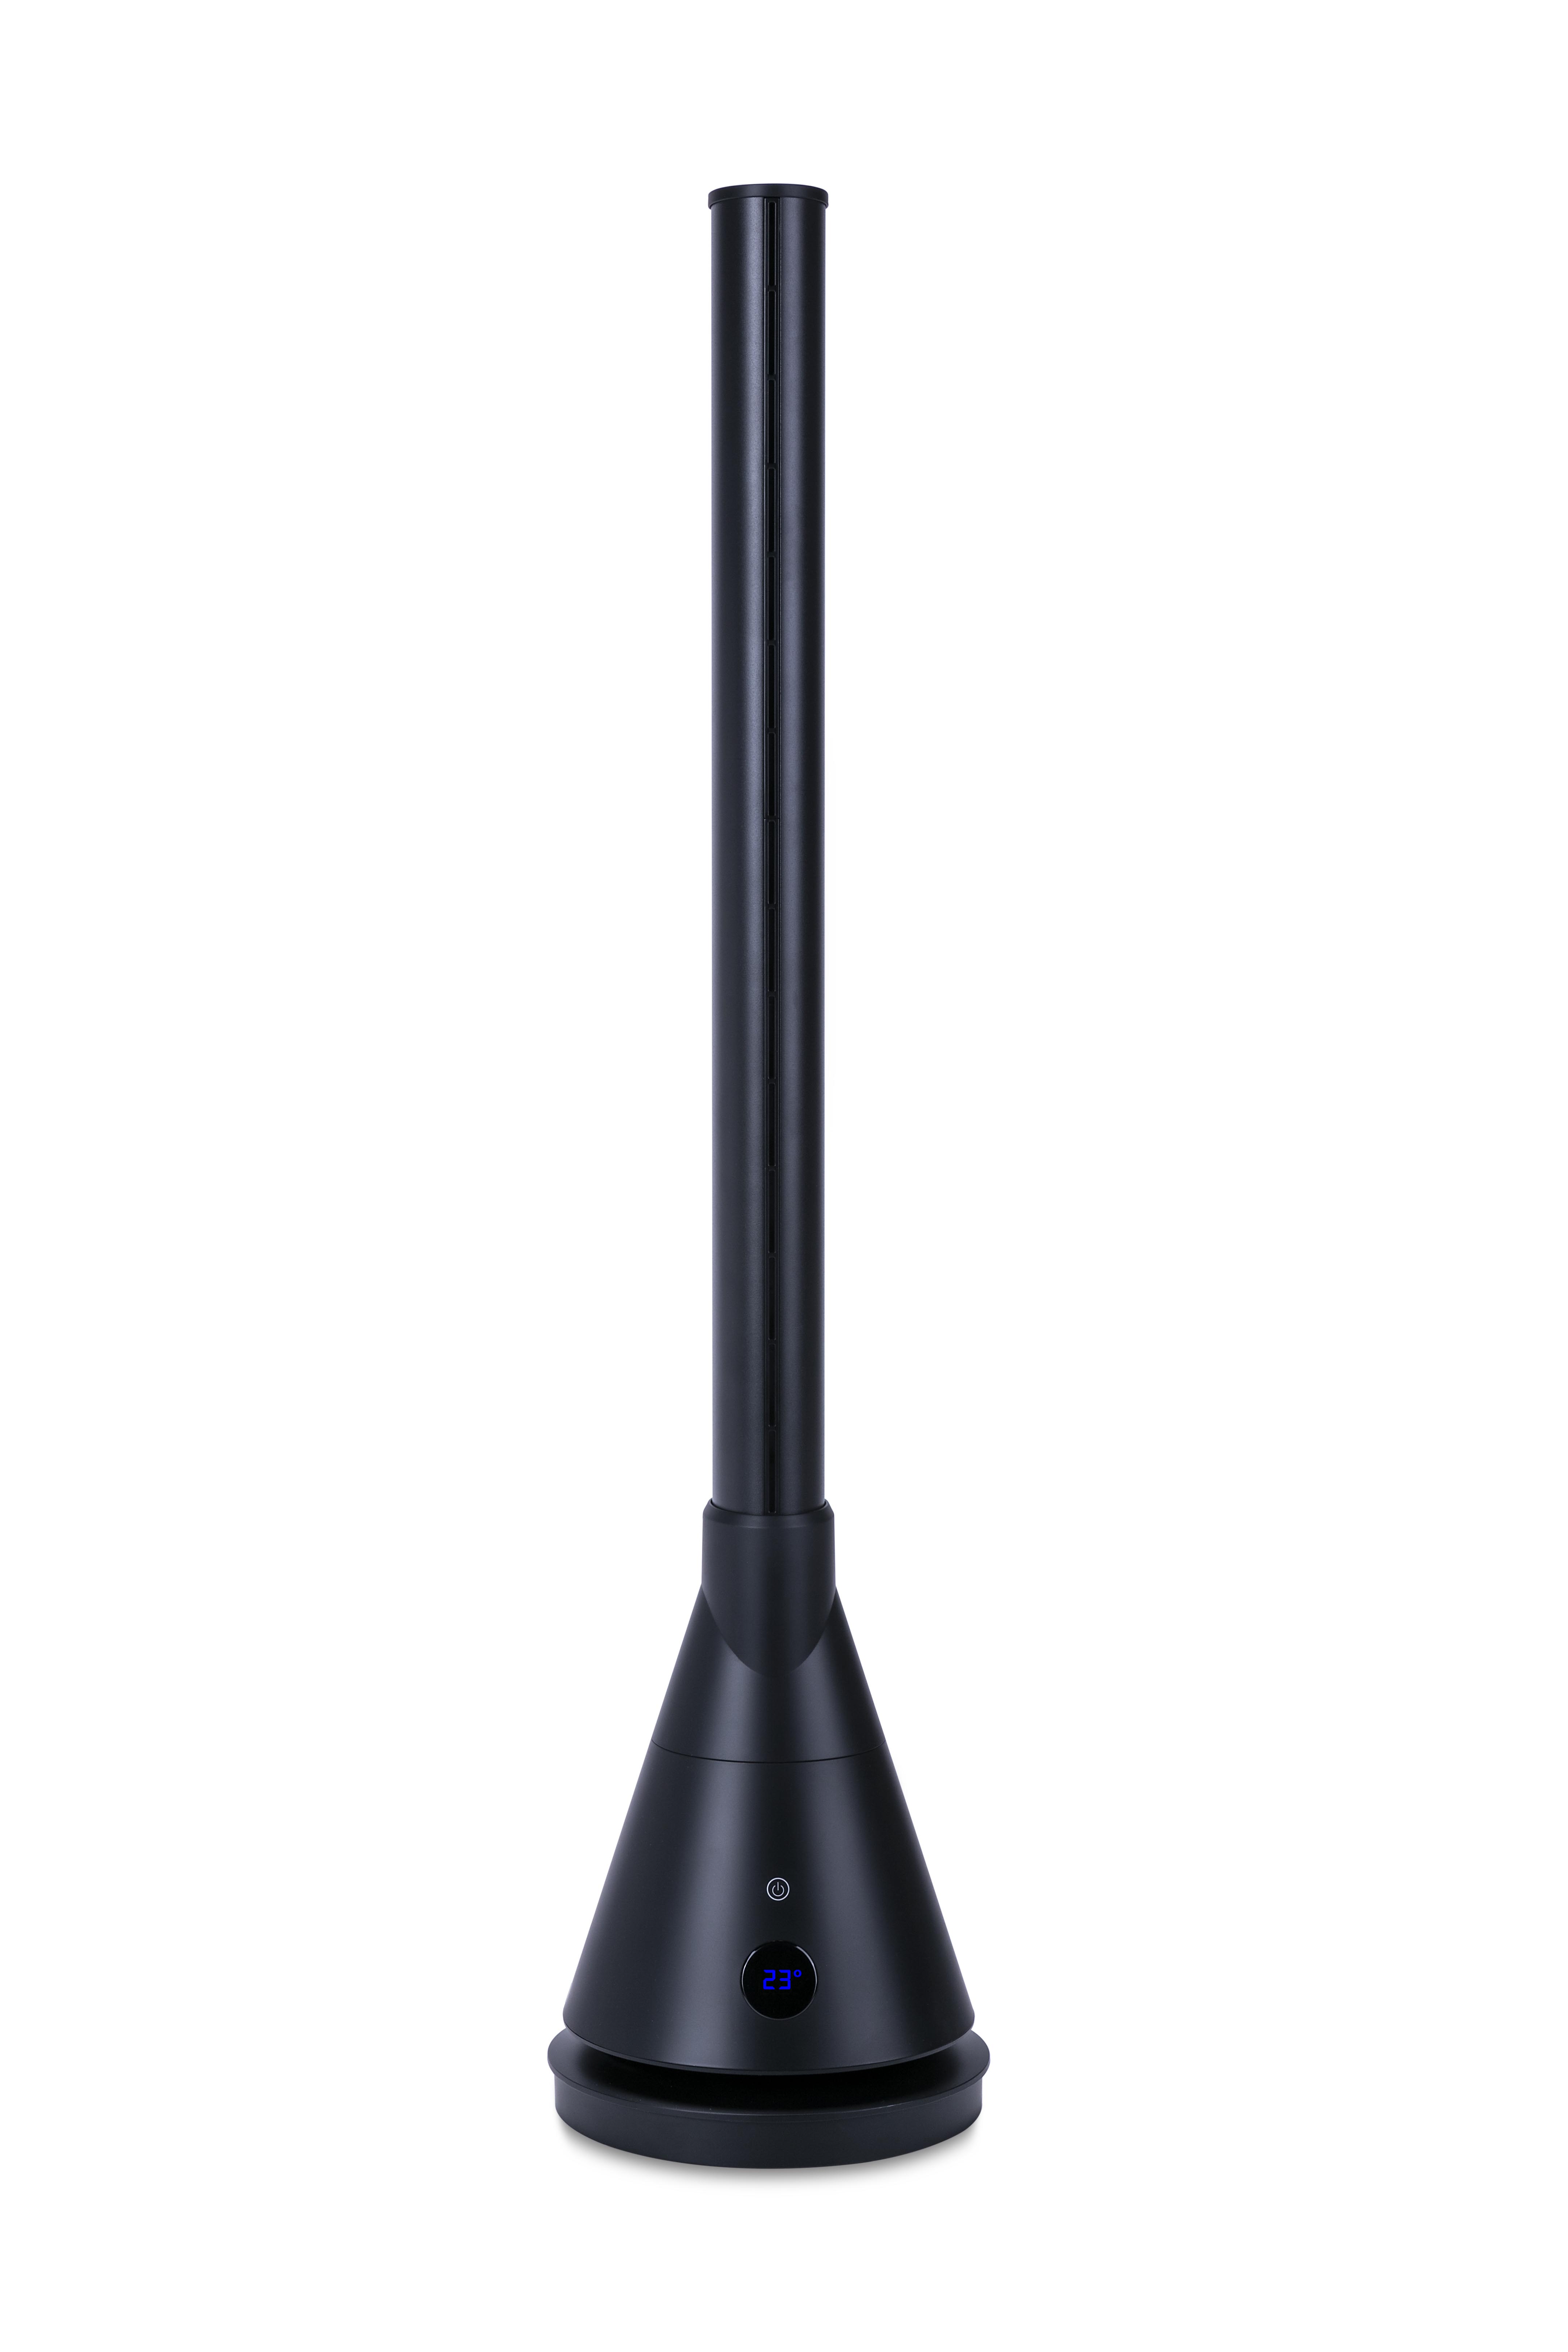 Newteck Dual 365 Torre de Ventilacion Frio/Calor 1800W - Oscilacion 80º - Modo Sueño - Panel Tactil - Mando a Distancia - Color Negro